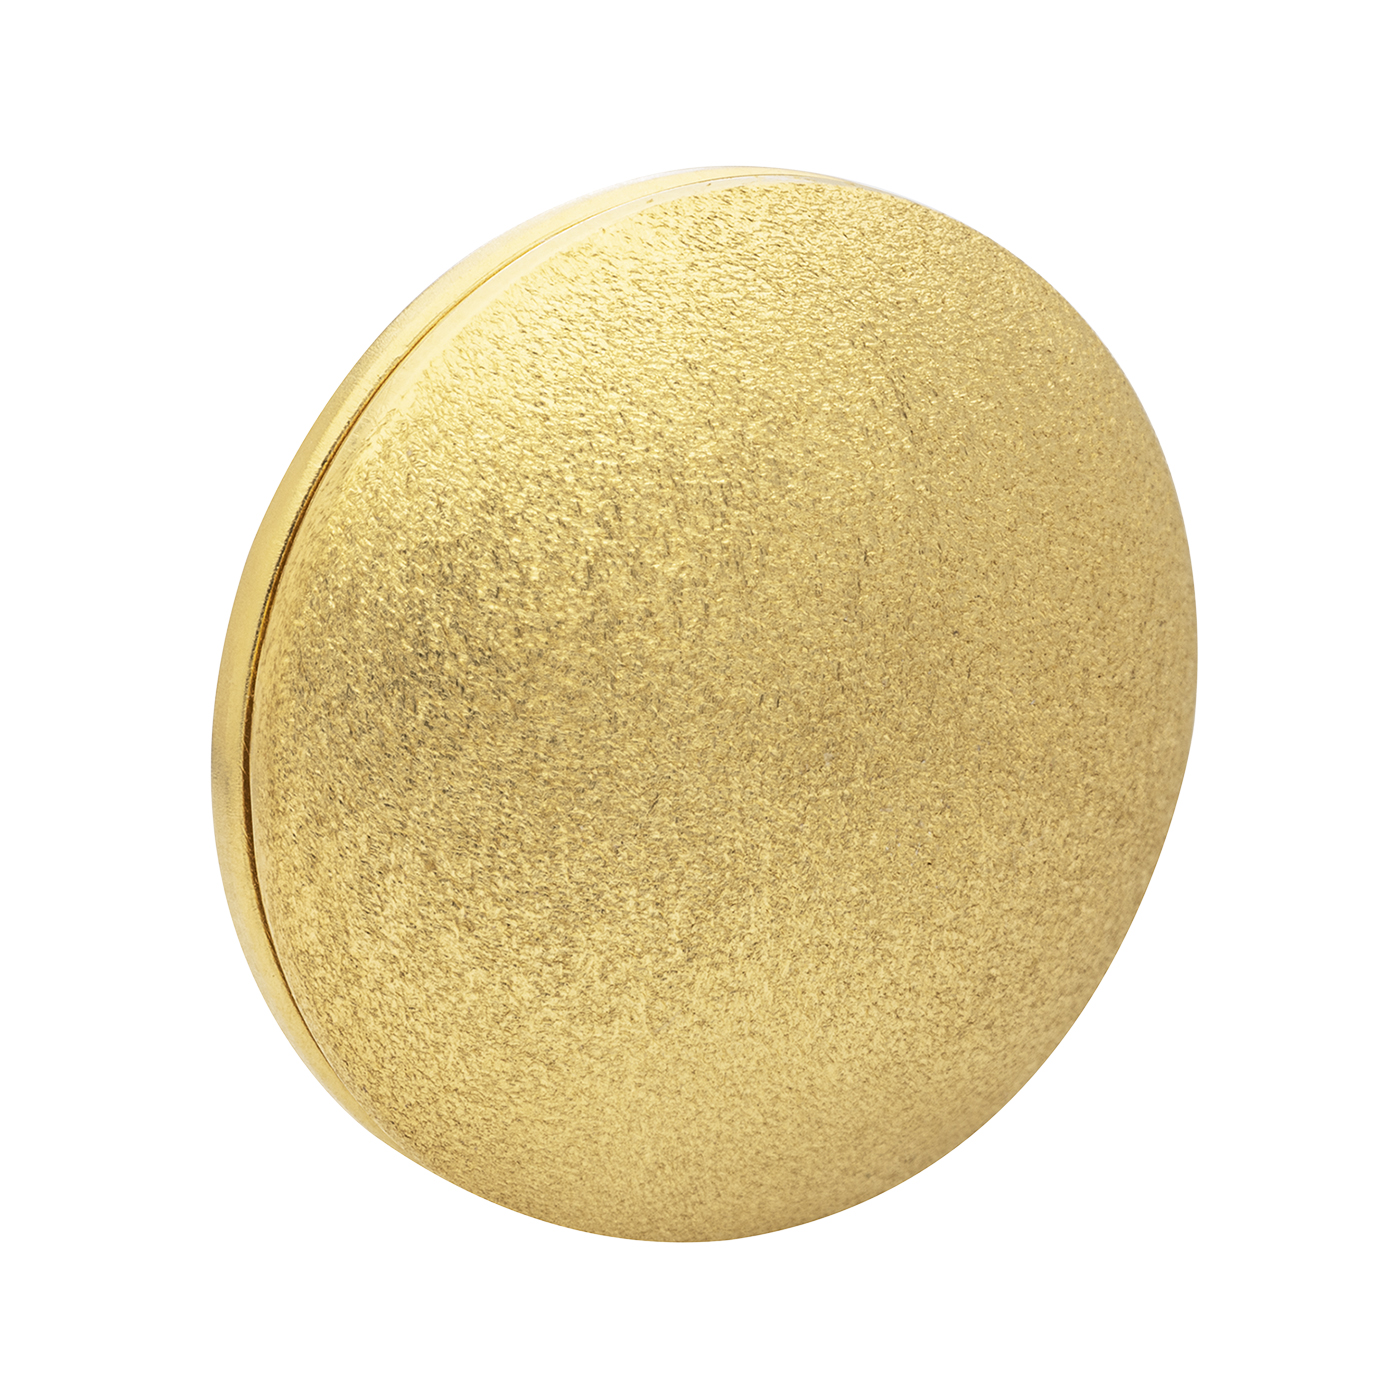 Magnetic Clasp, Discus,925Ag Gold-Pl. Polished/Matt, ø 20 mm - 1 piece